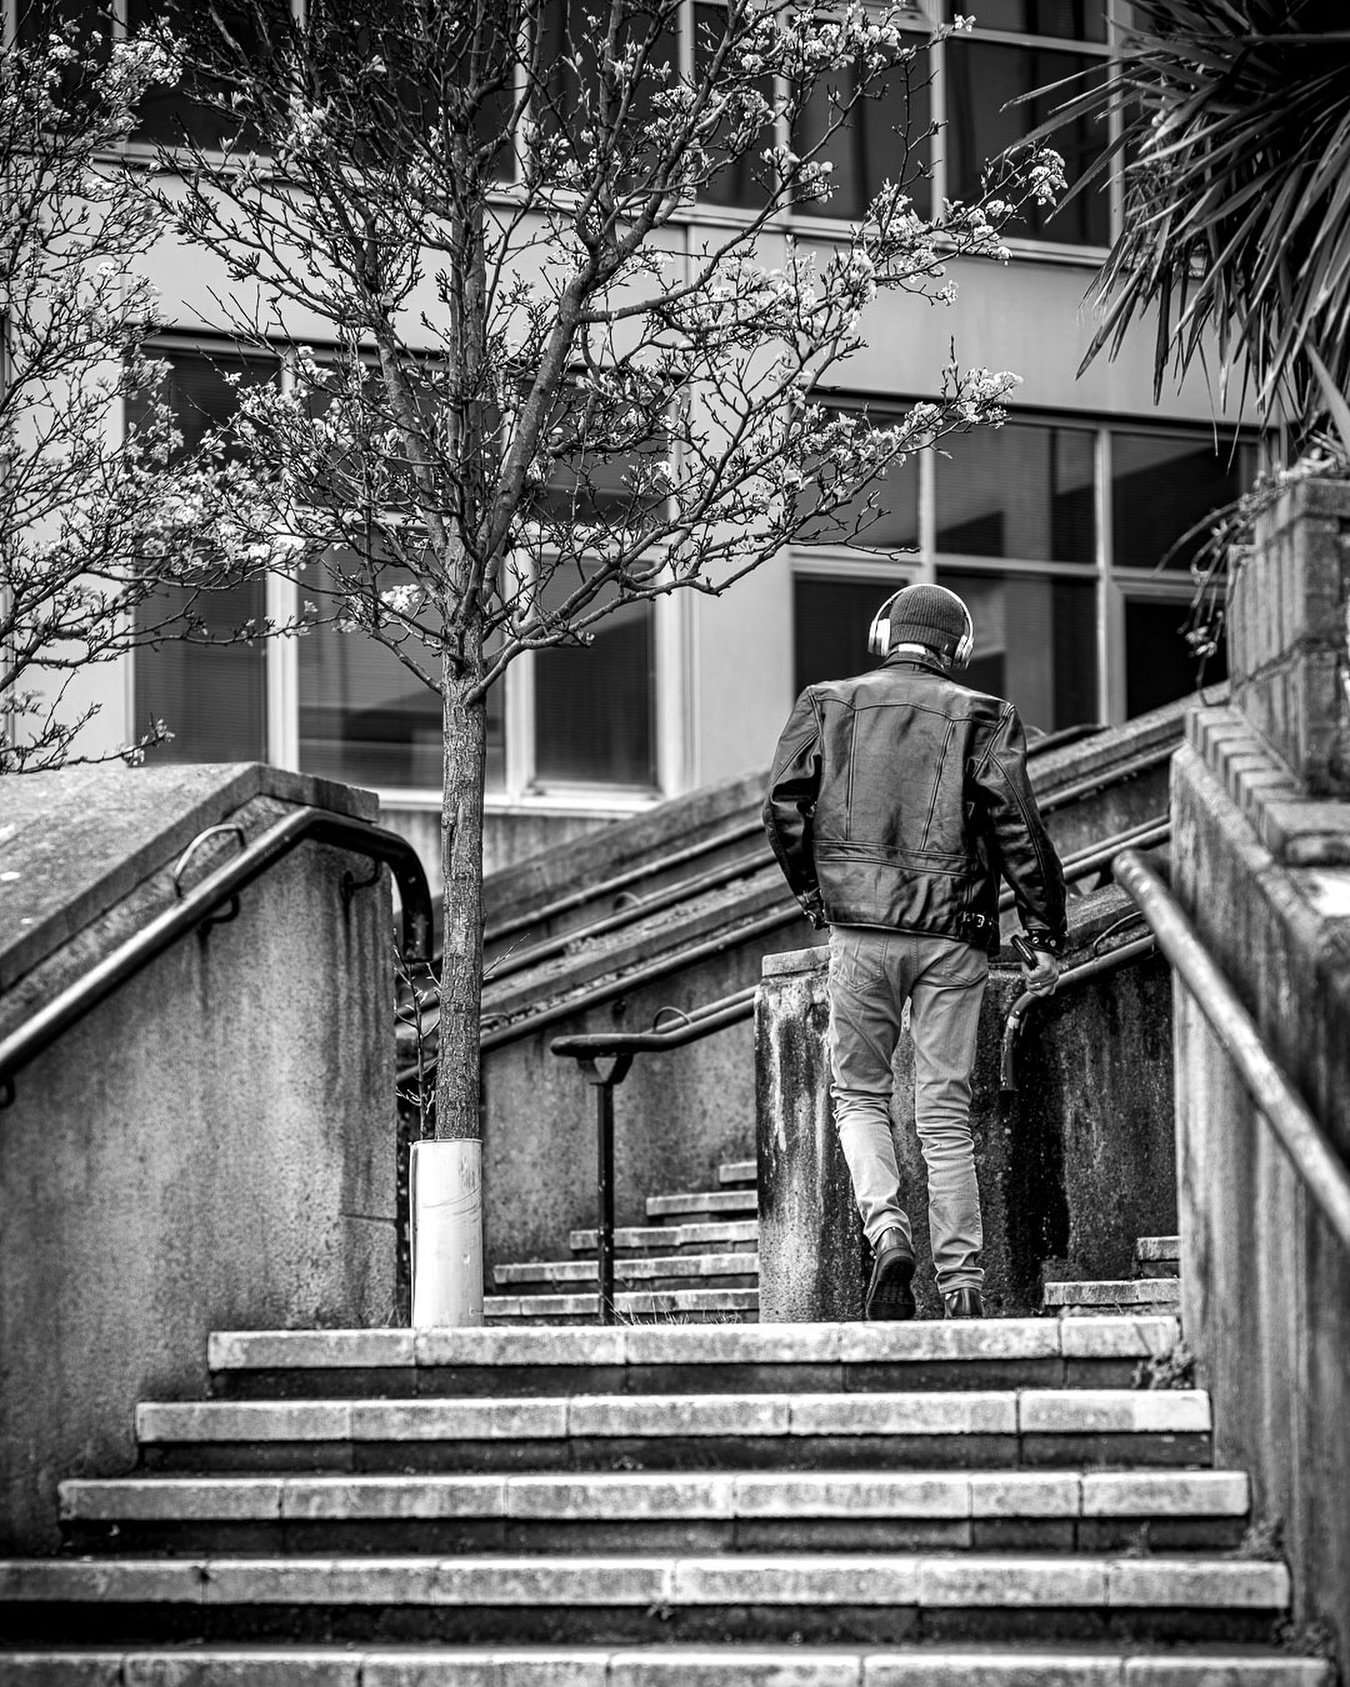 Steps, stairs and steps &hellip;

Mar 2024 | Brighton, England
Leica M11-P | Summilux-M 75 f/2
&copy; 2024 Simon R. Cole

#Leica #LeicaM #LeicaUK #LeicaPhotography #ShotWideOpen #BnW #BnWPhoto #BnWPhotography #BlackandWhitePhotography #CityBnW #Maste